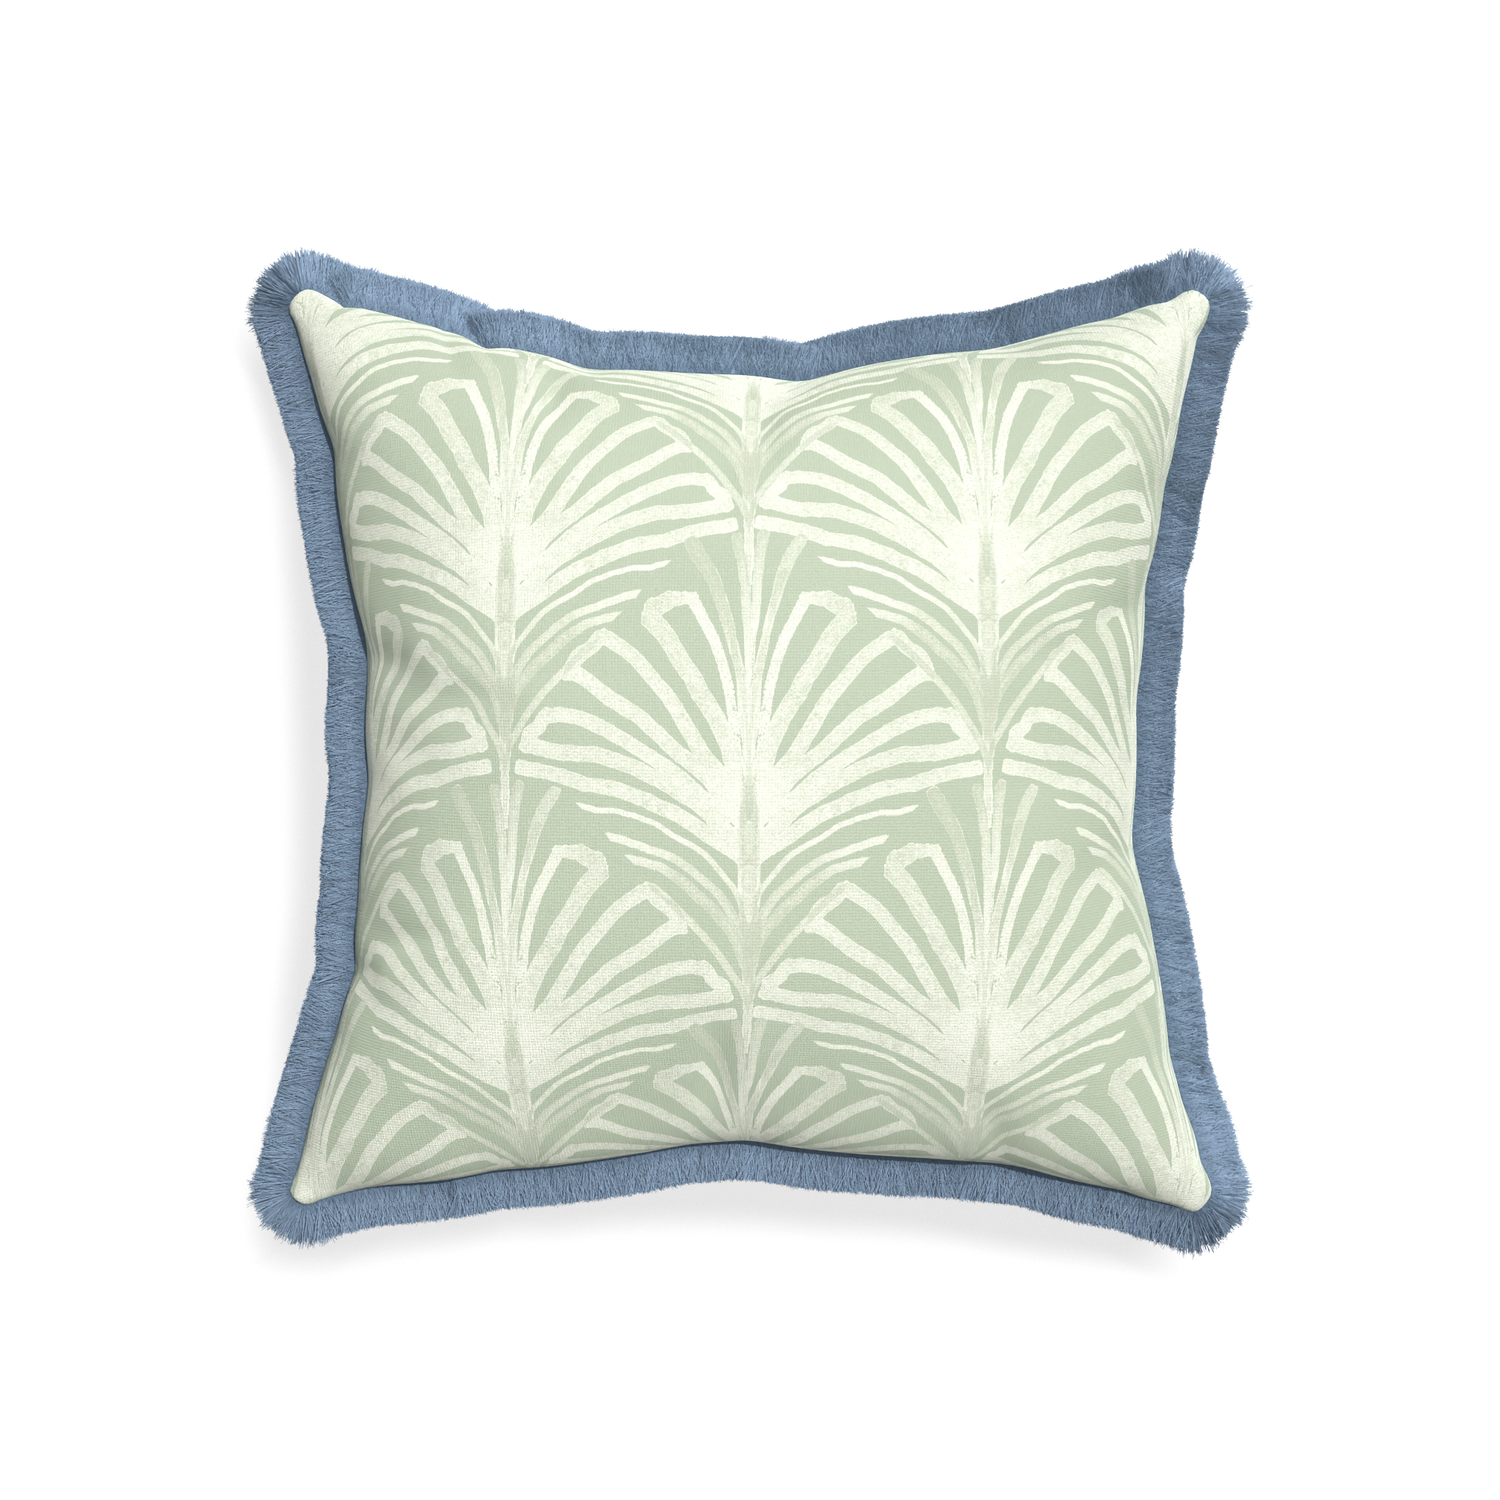 20-square suzy sage custom pillow with sky fringe on white background